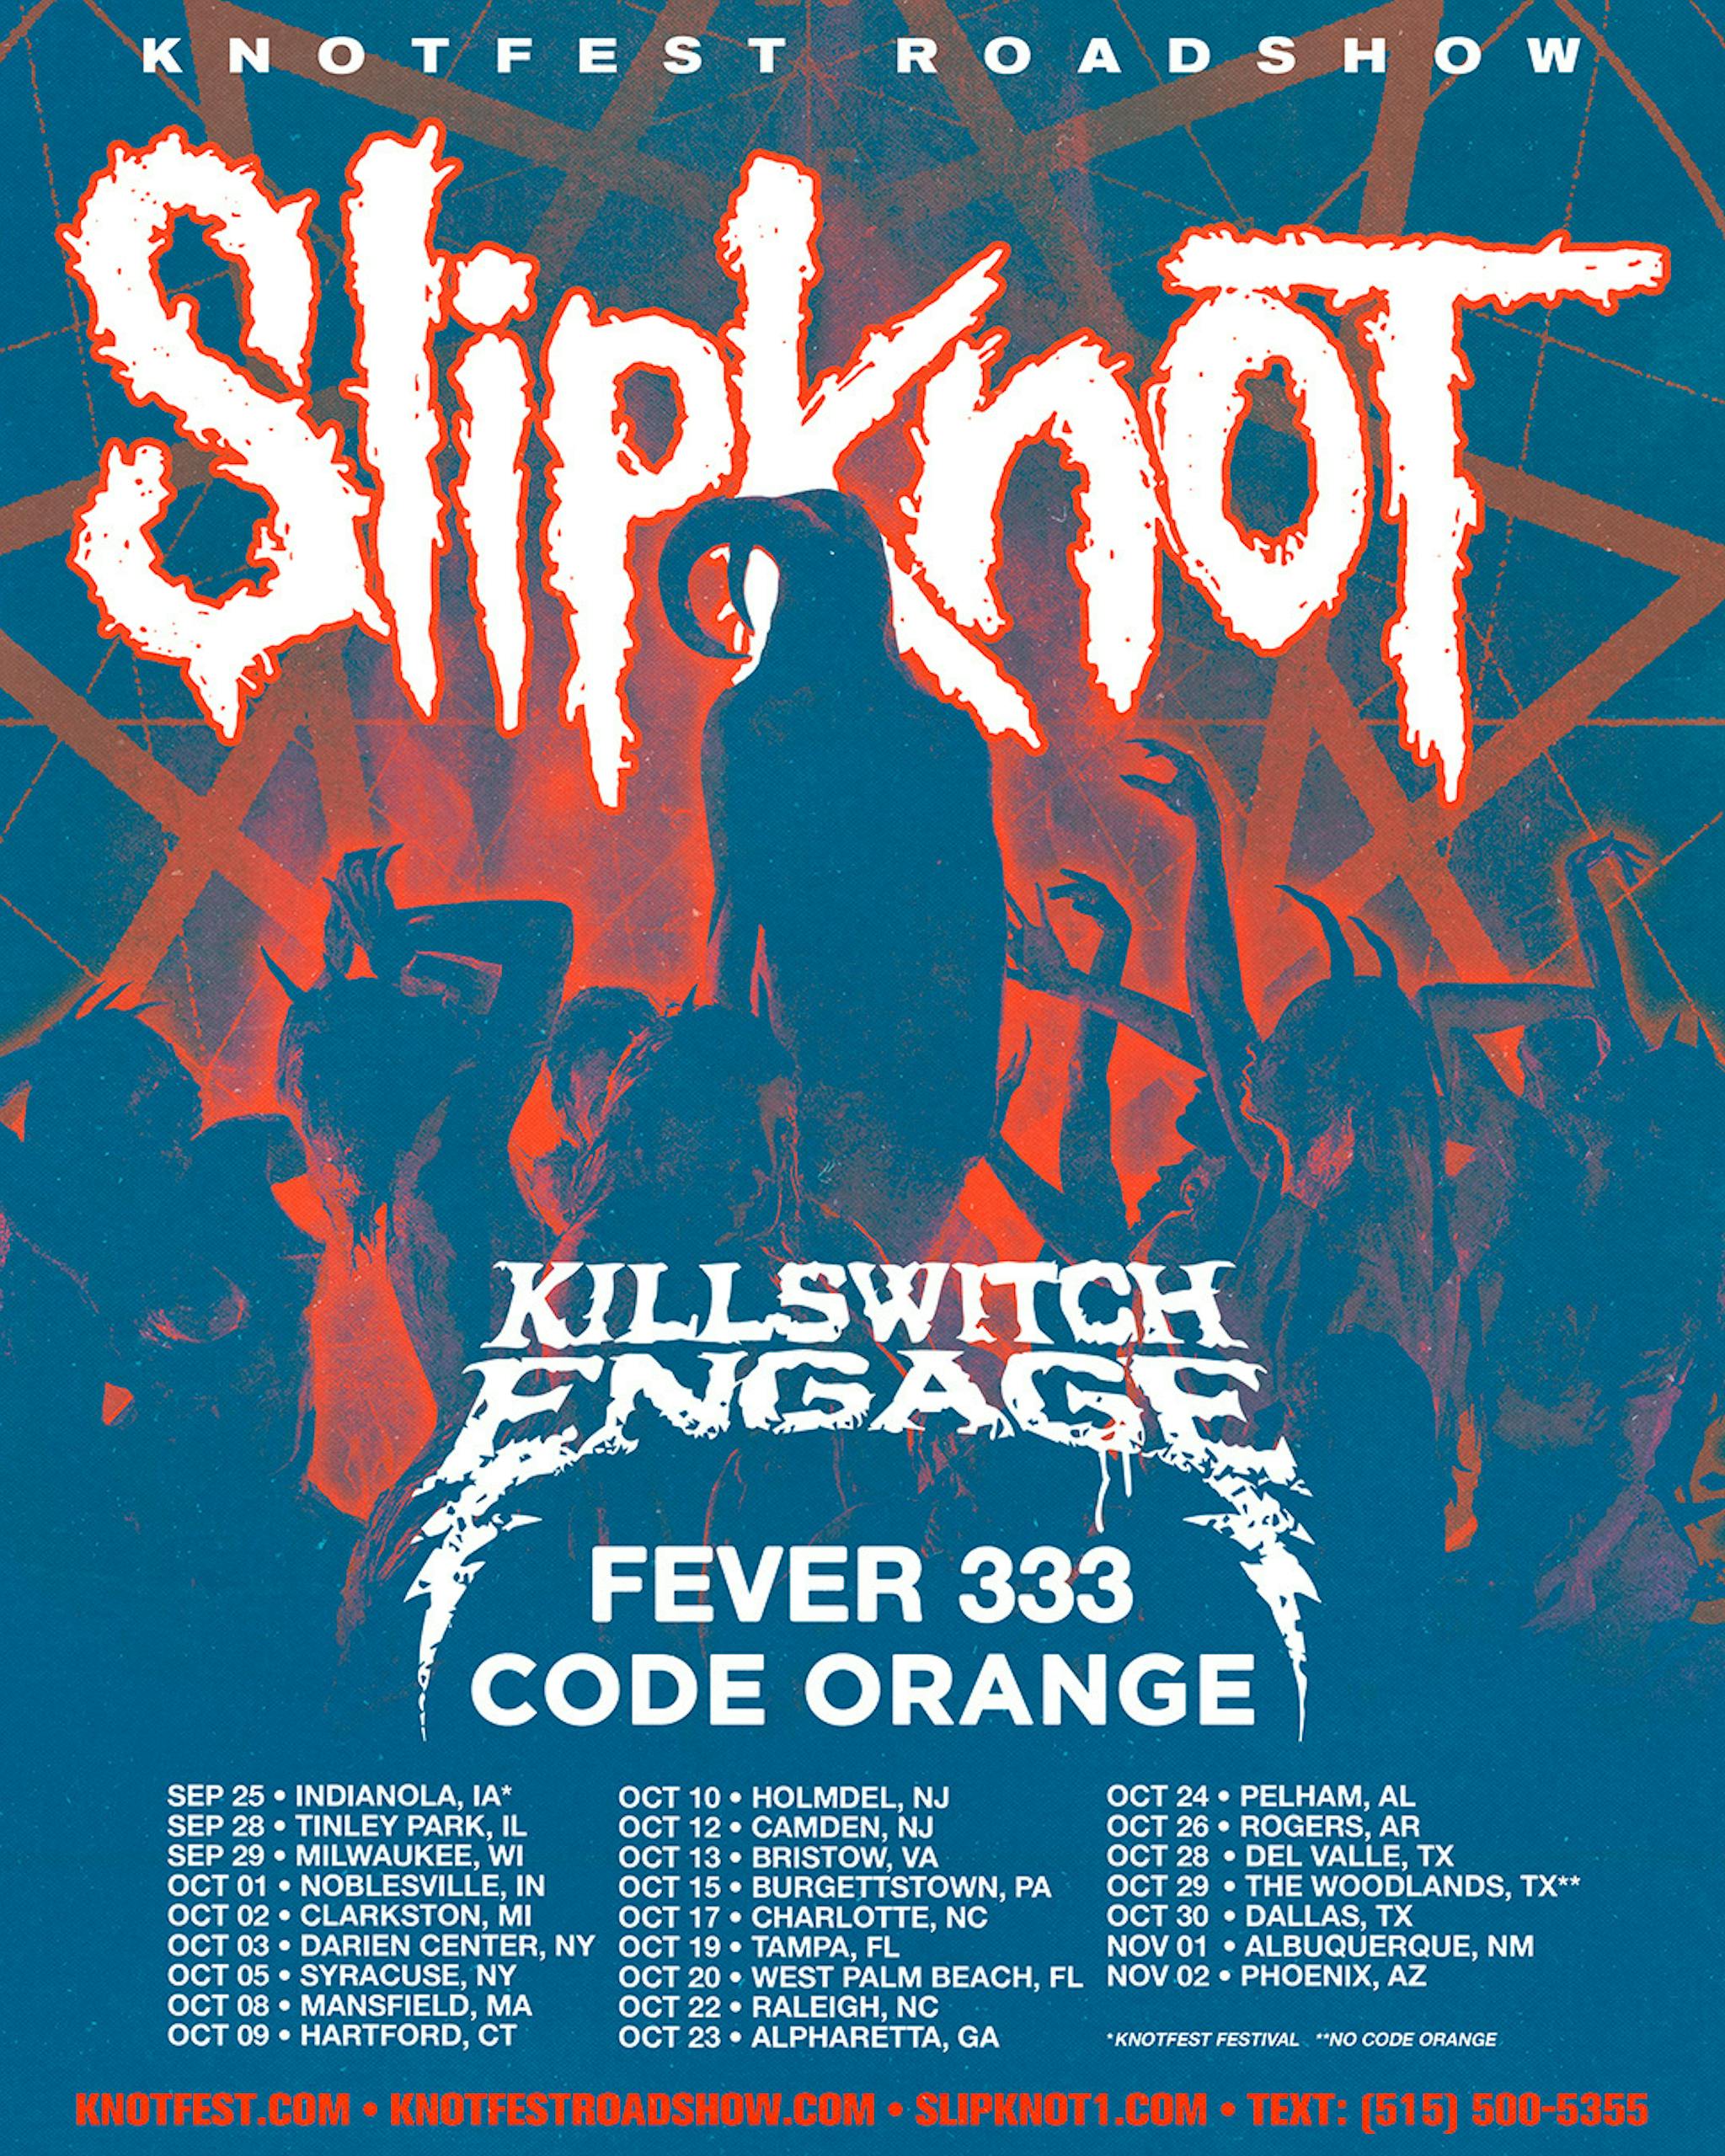 Slipknot Knotfest Roadshow 2021 poster